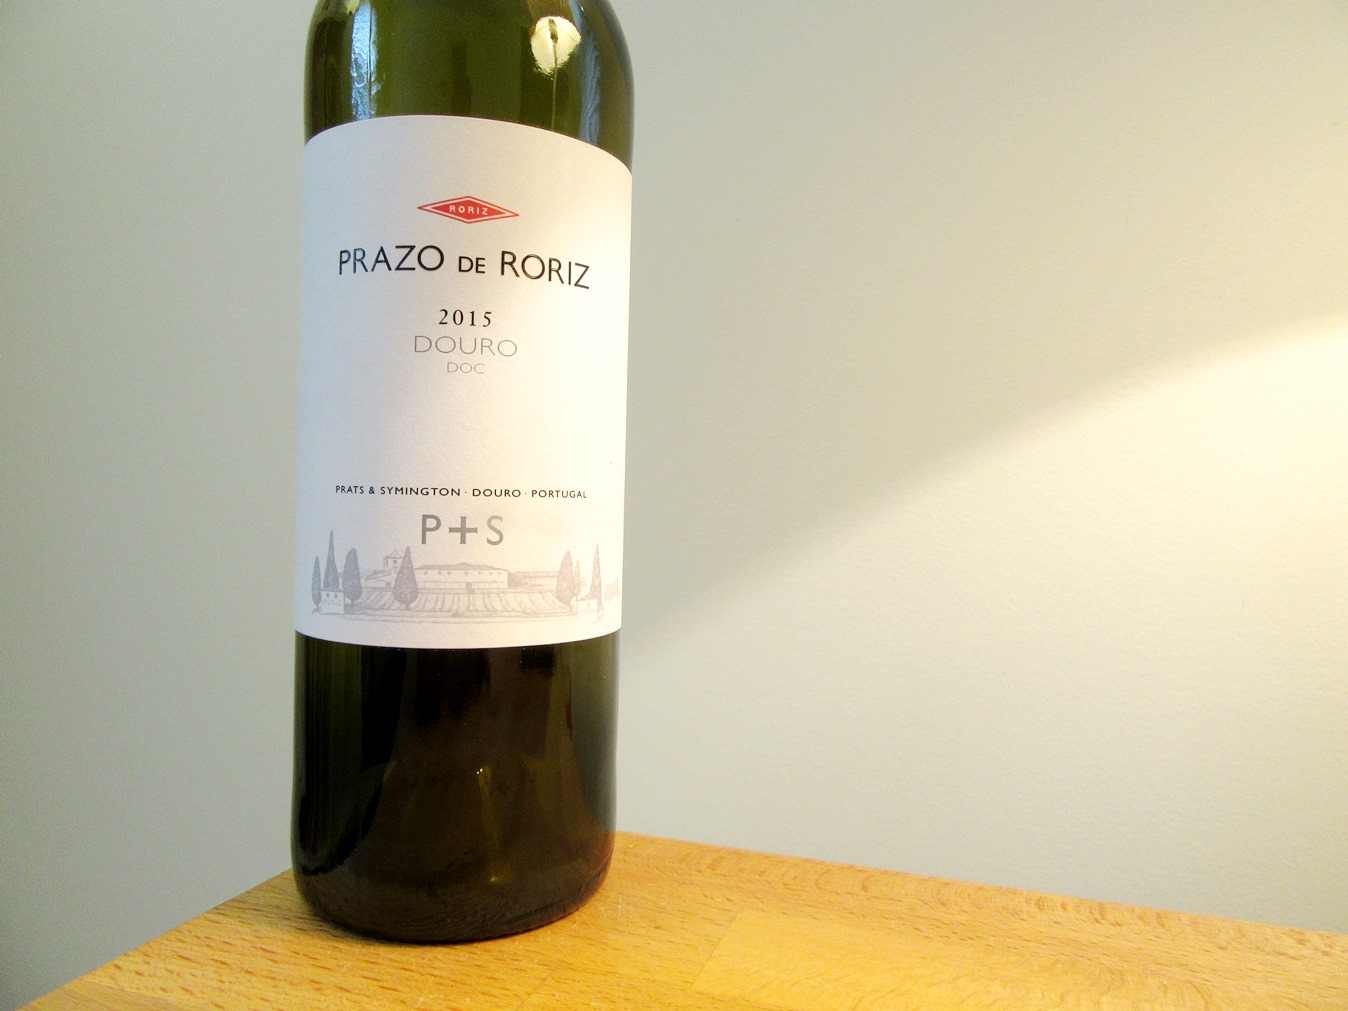 Prats & Symington, Prazo de Roriz 2015, Douro, Portugal, Wine Casual